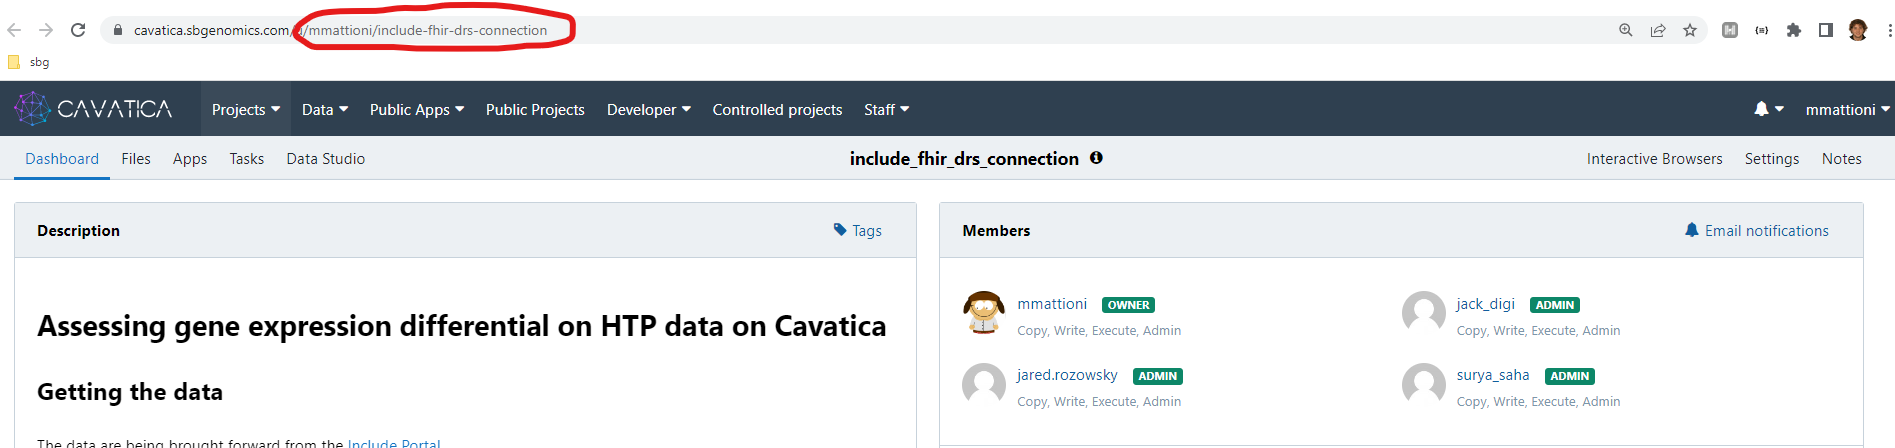 img/cavatica_project_id.png